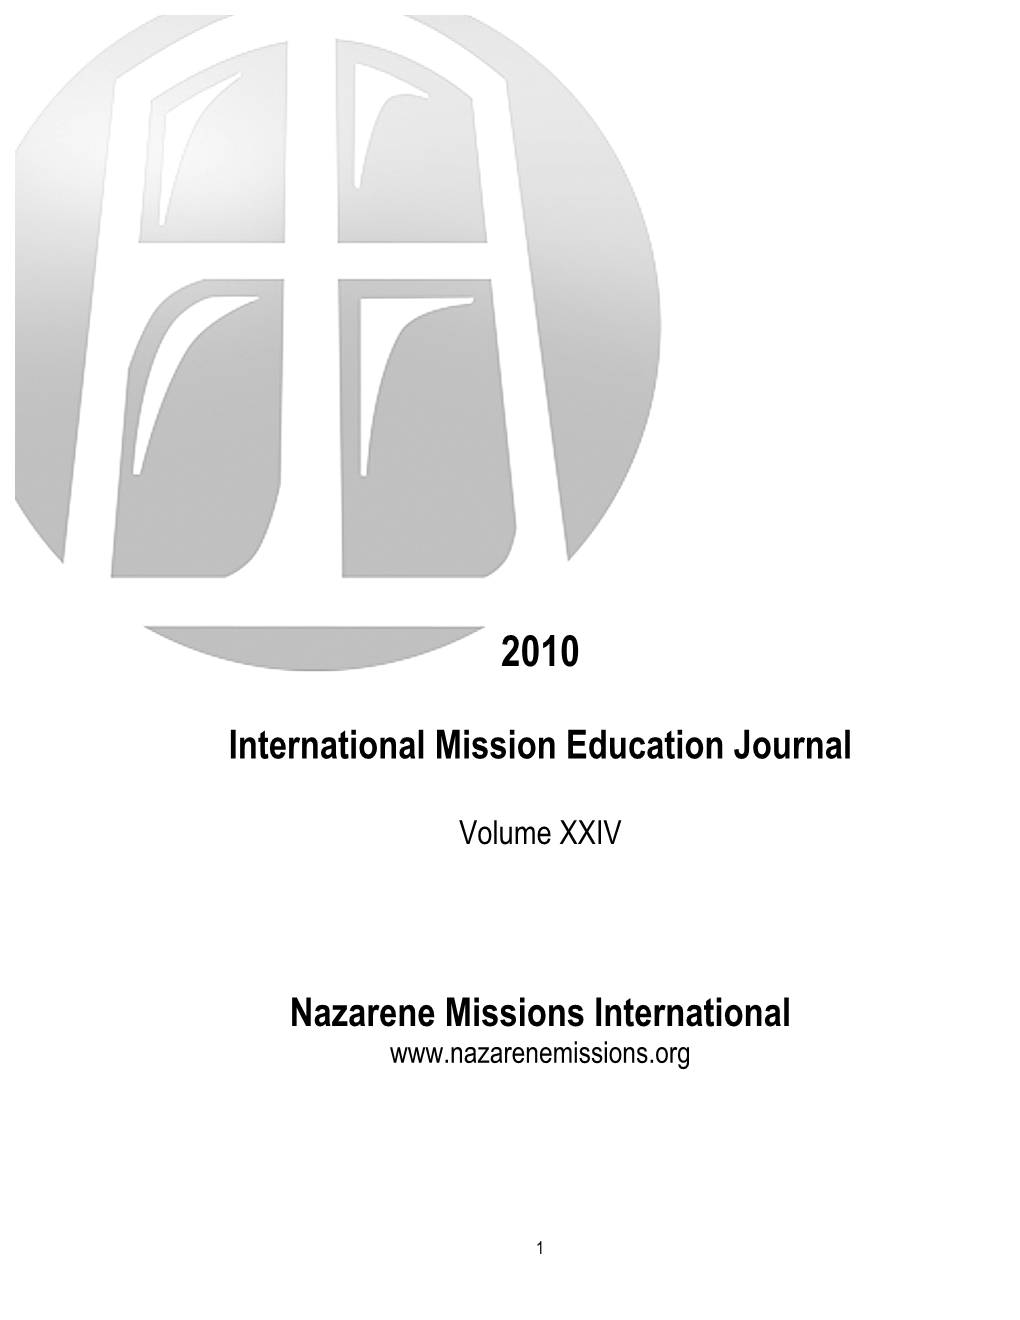 International Mission Education Journal Nazarene Missions